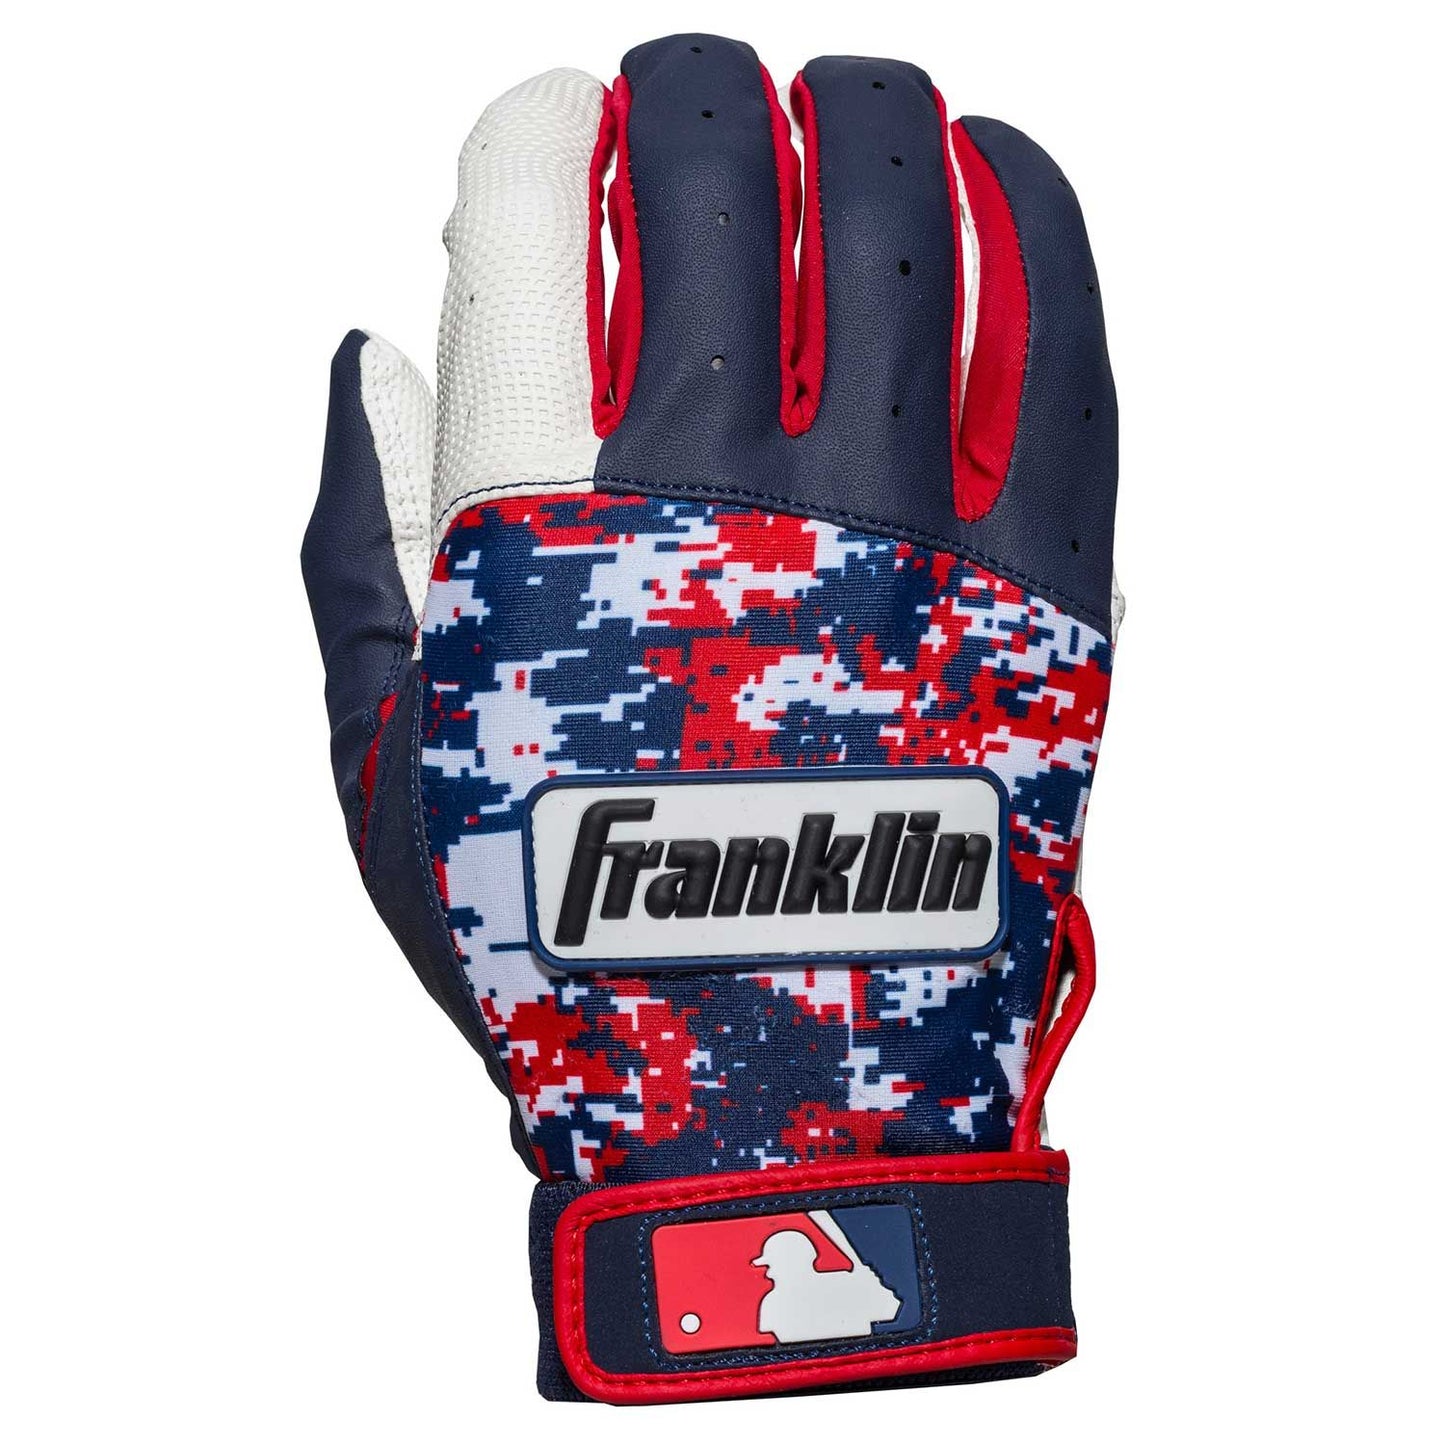 Franklin New Baseball Batting Gloves Size Small Large XL Red Digitek Sal Perez